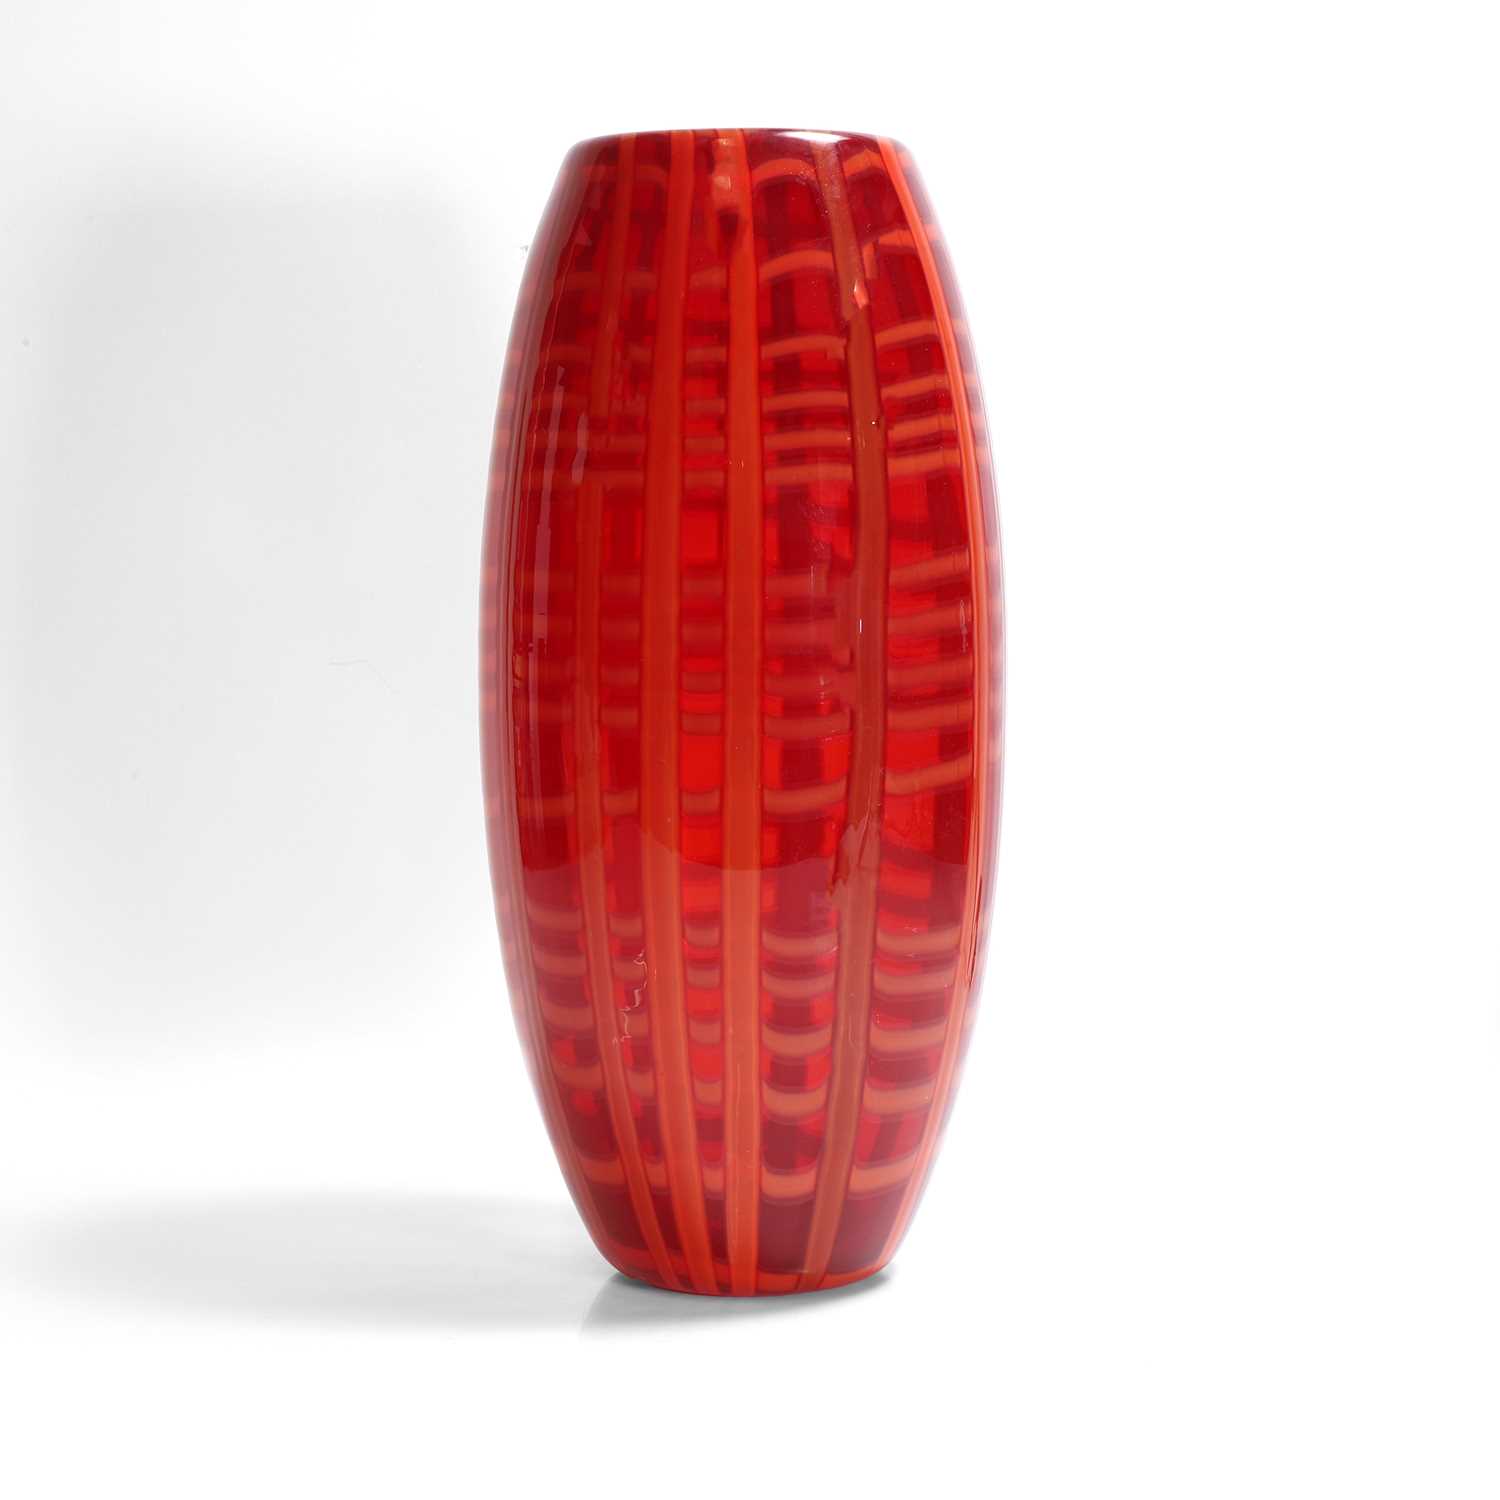 An Italian Murano glass vase, - Image 2 of 7